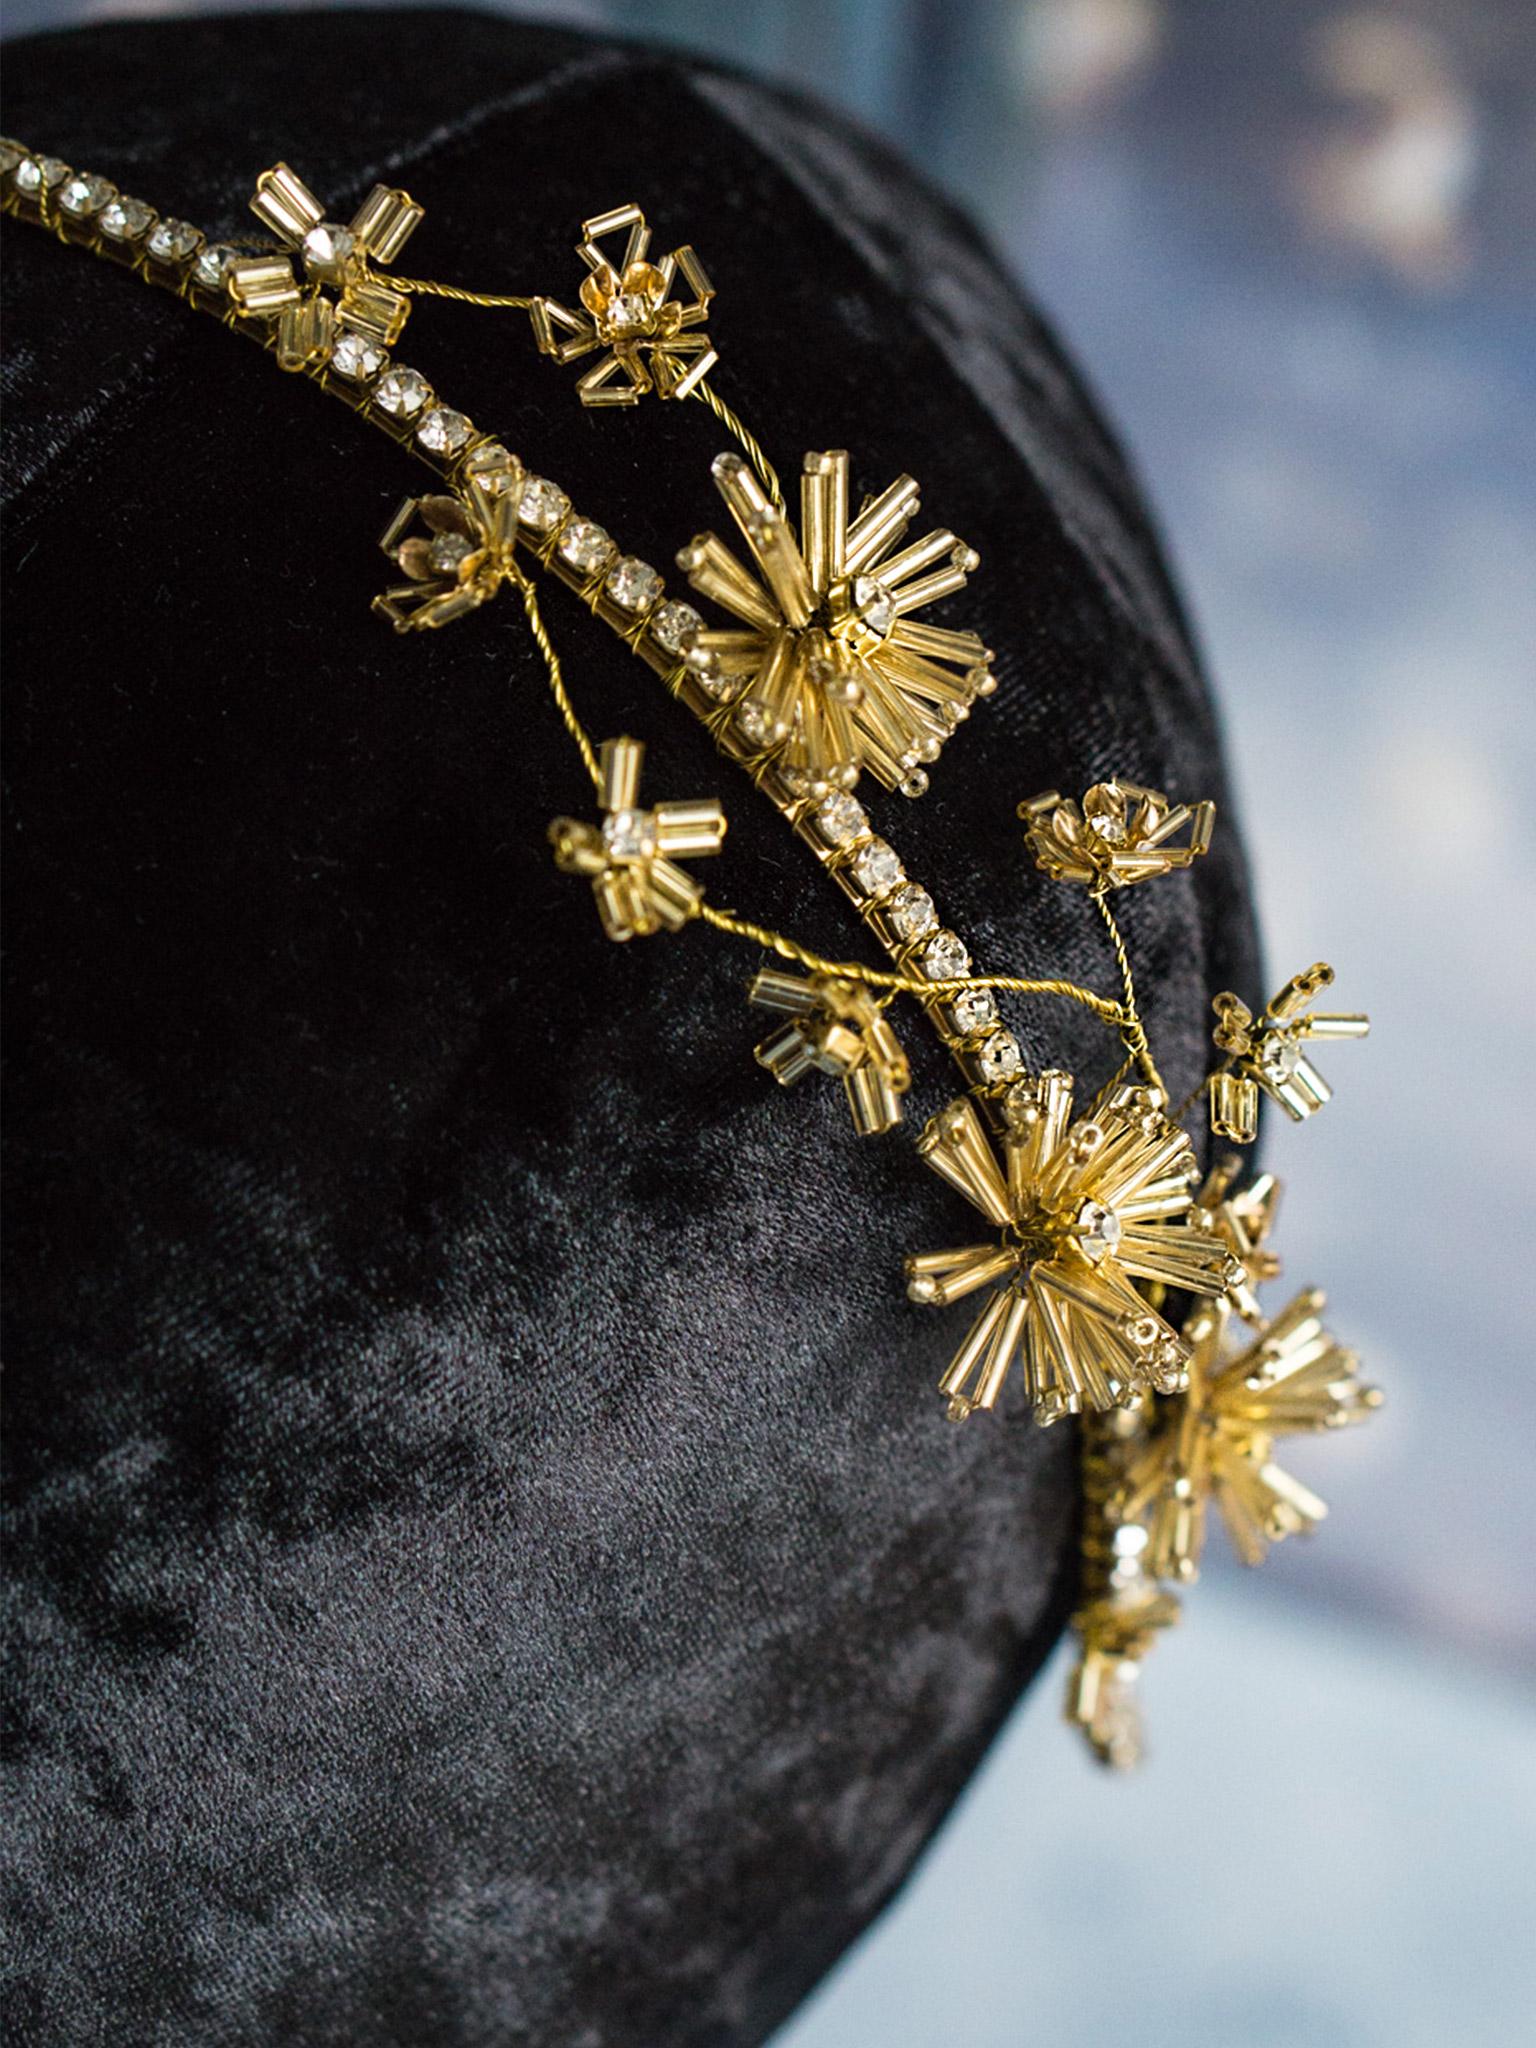 Gold headband with dandelion and wildflower design